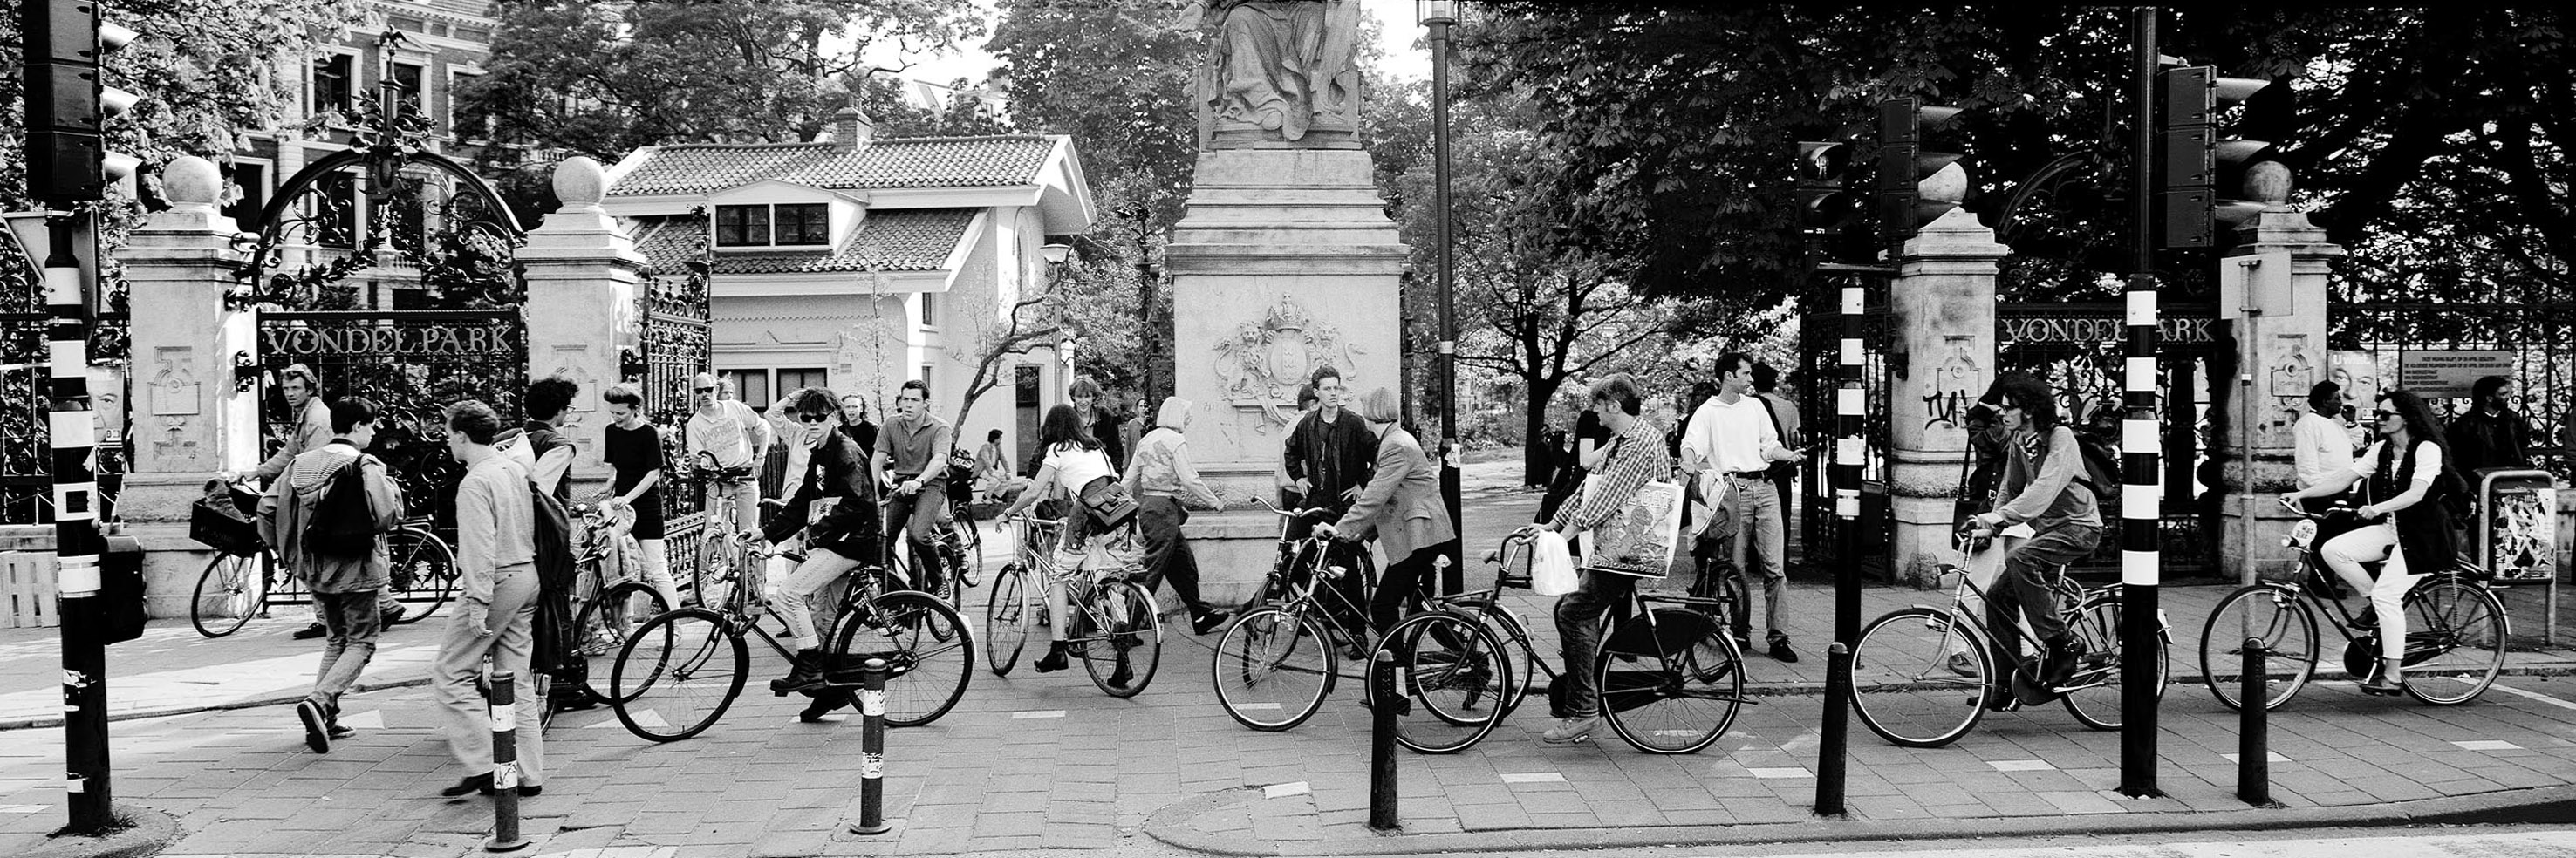 Amszterdam stadhouderskade bejárat vondelpark 1994 © hans van der meer